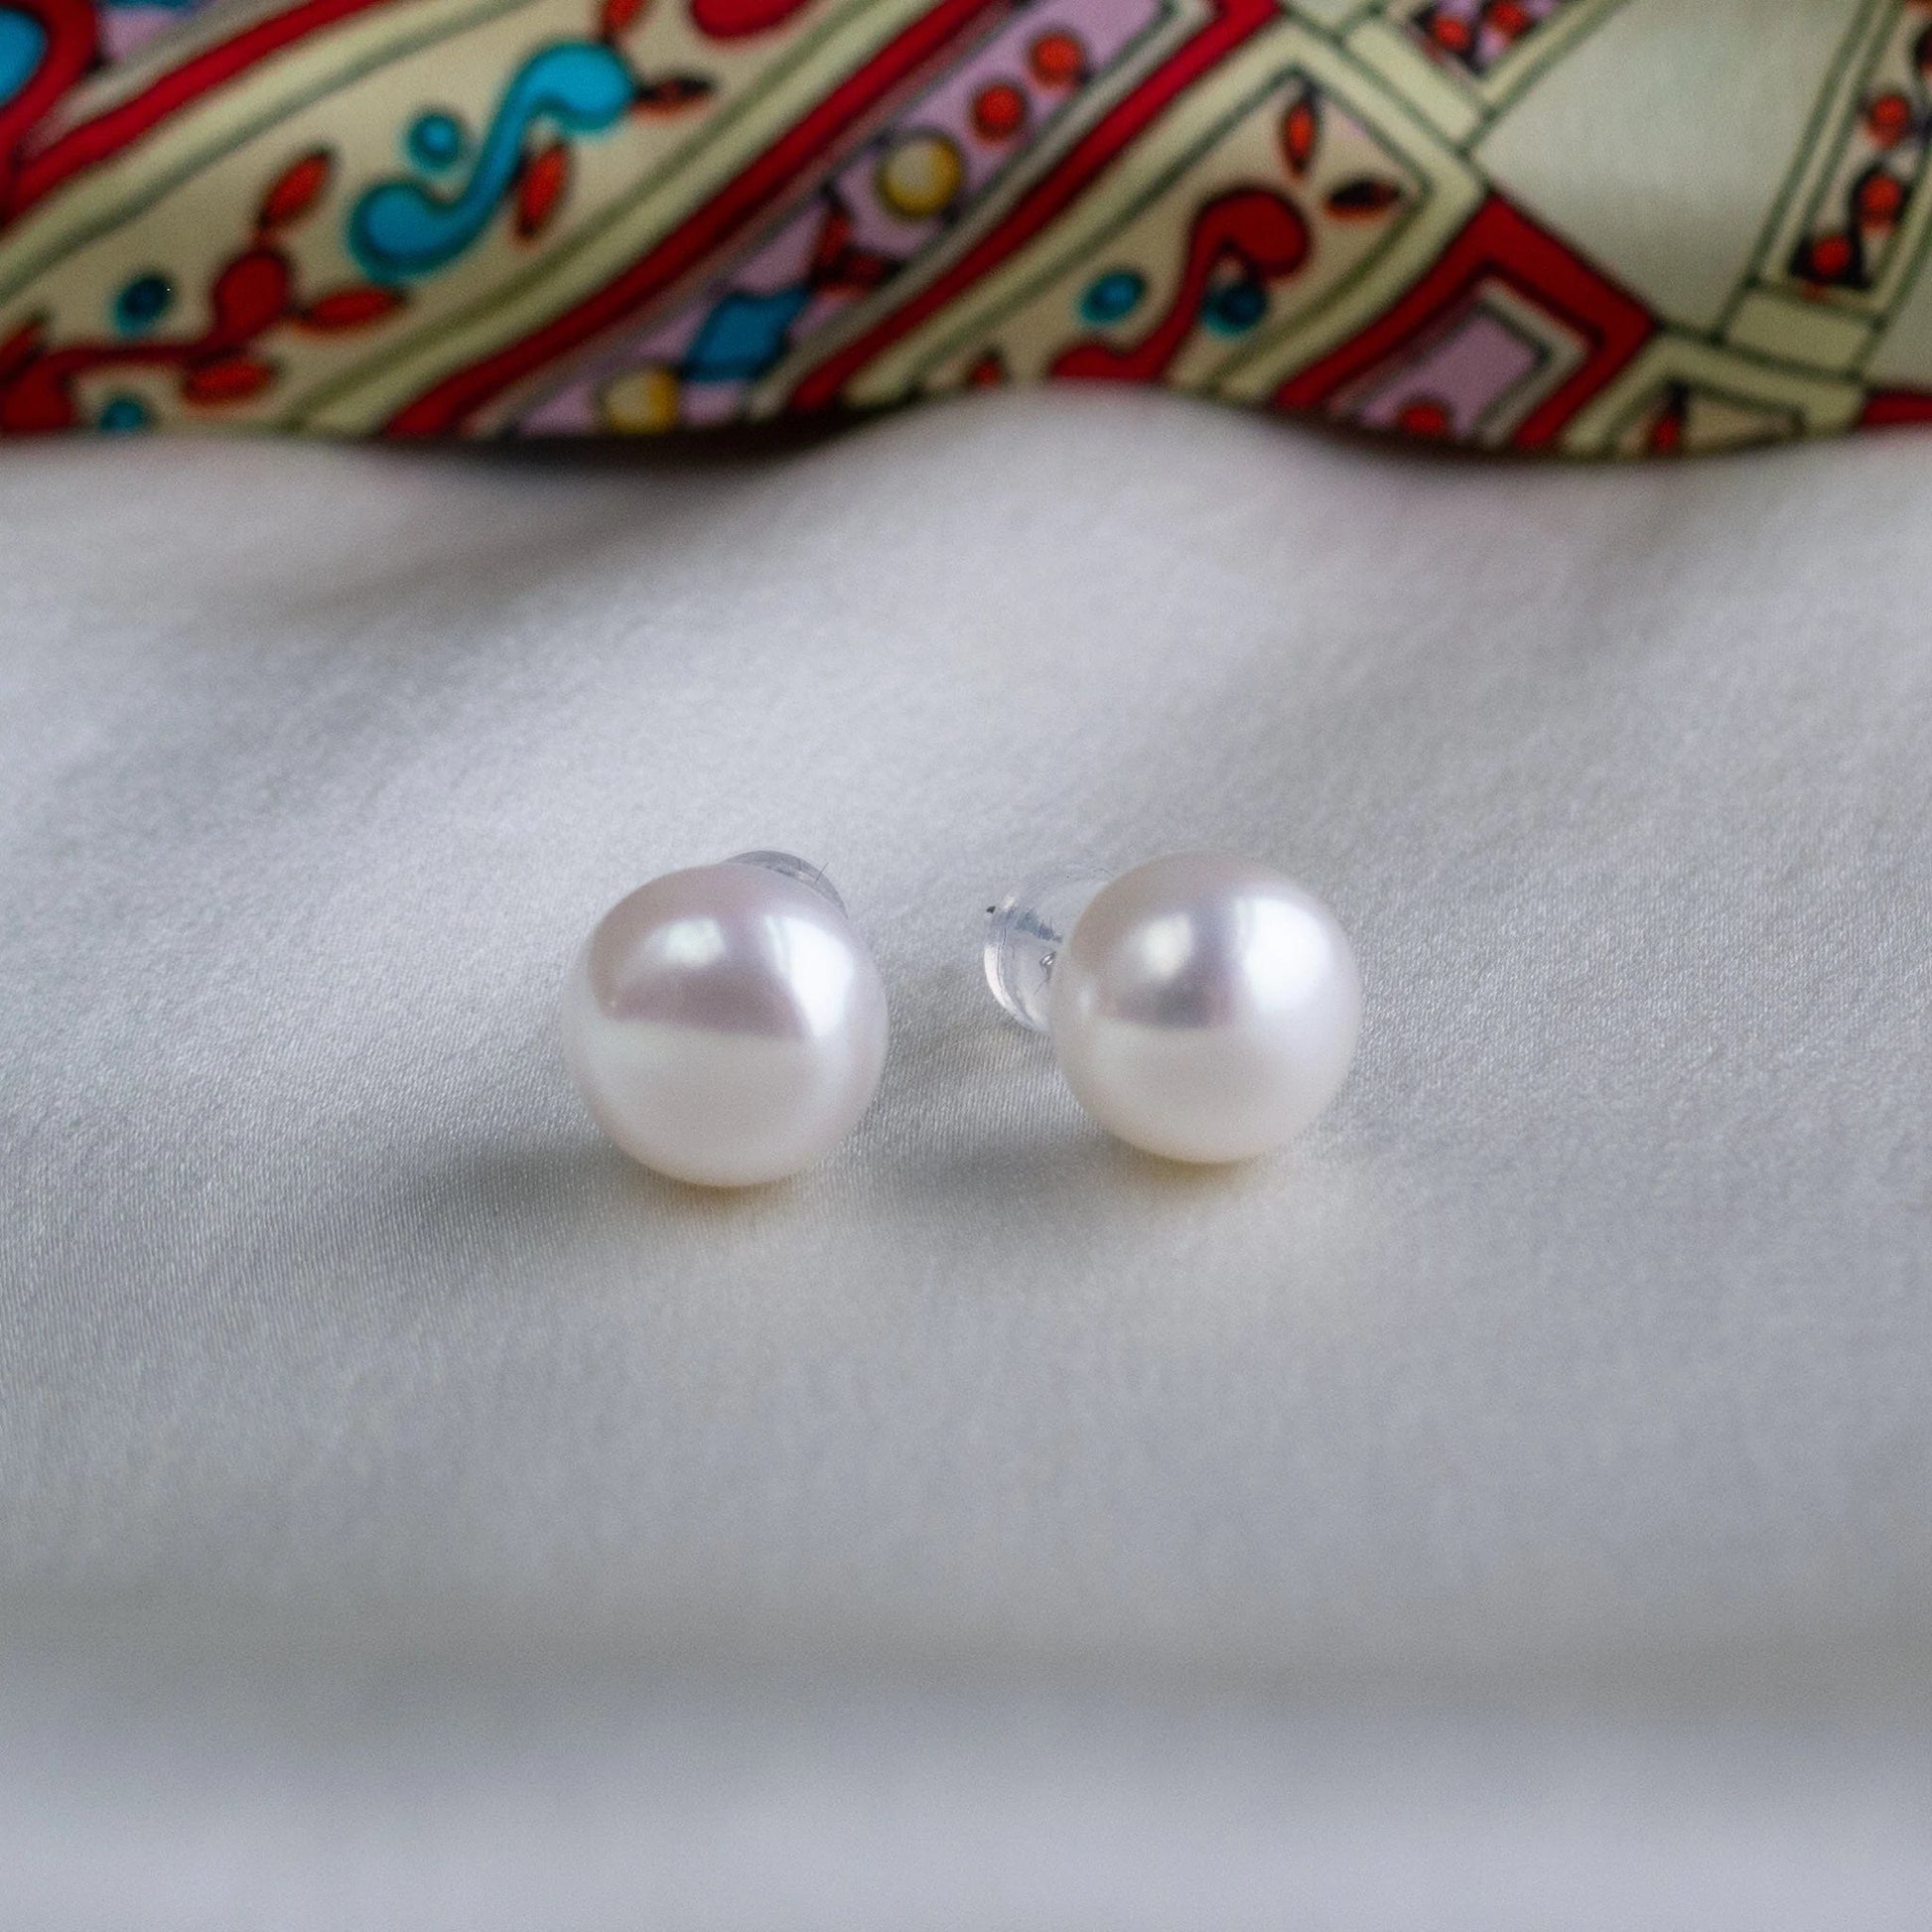 Arbor Trading Post Earrings Arbor Trading Post Large Freshwater White Pearl Stud Earrings - 9 mm Pearls, 925 Sterling Silver